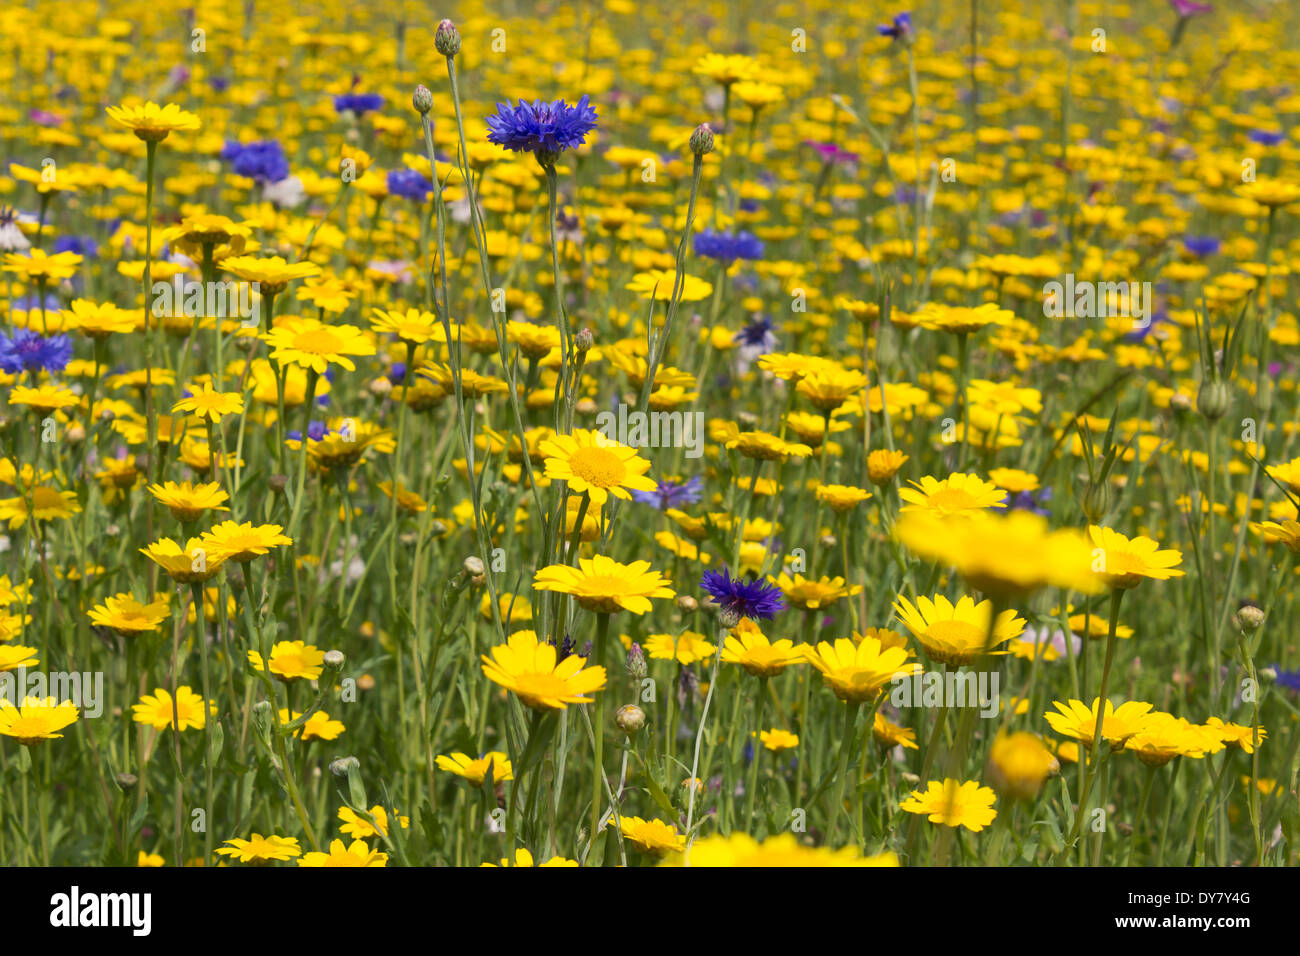 Germany, Rhineland-Palatinate, blue cornflower (Centaurea cyanus), yellow corn marigold (Glebionis segetum) Stock Photo